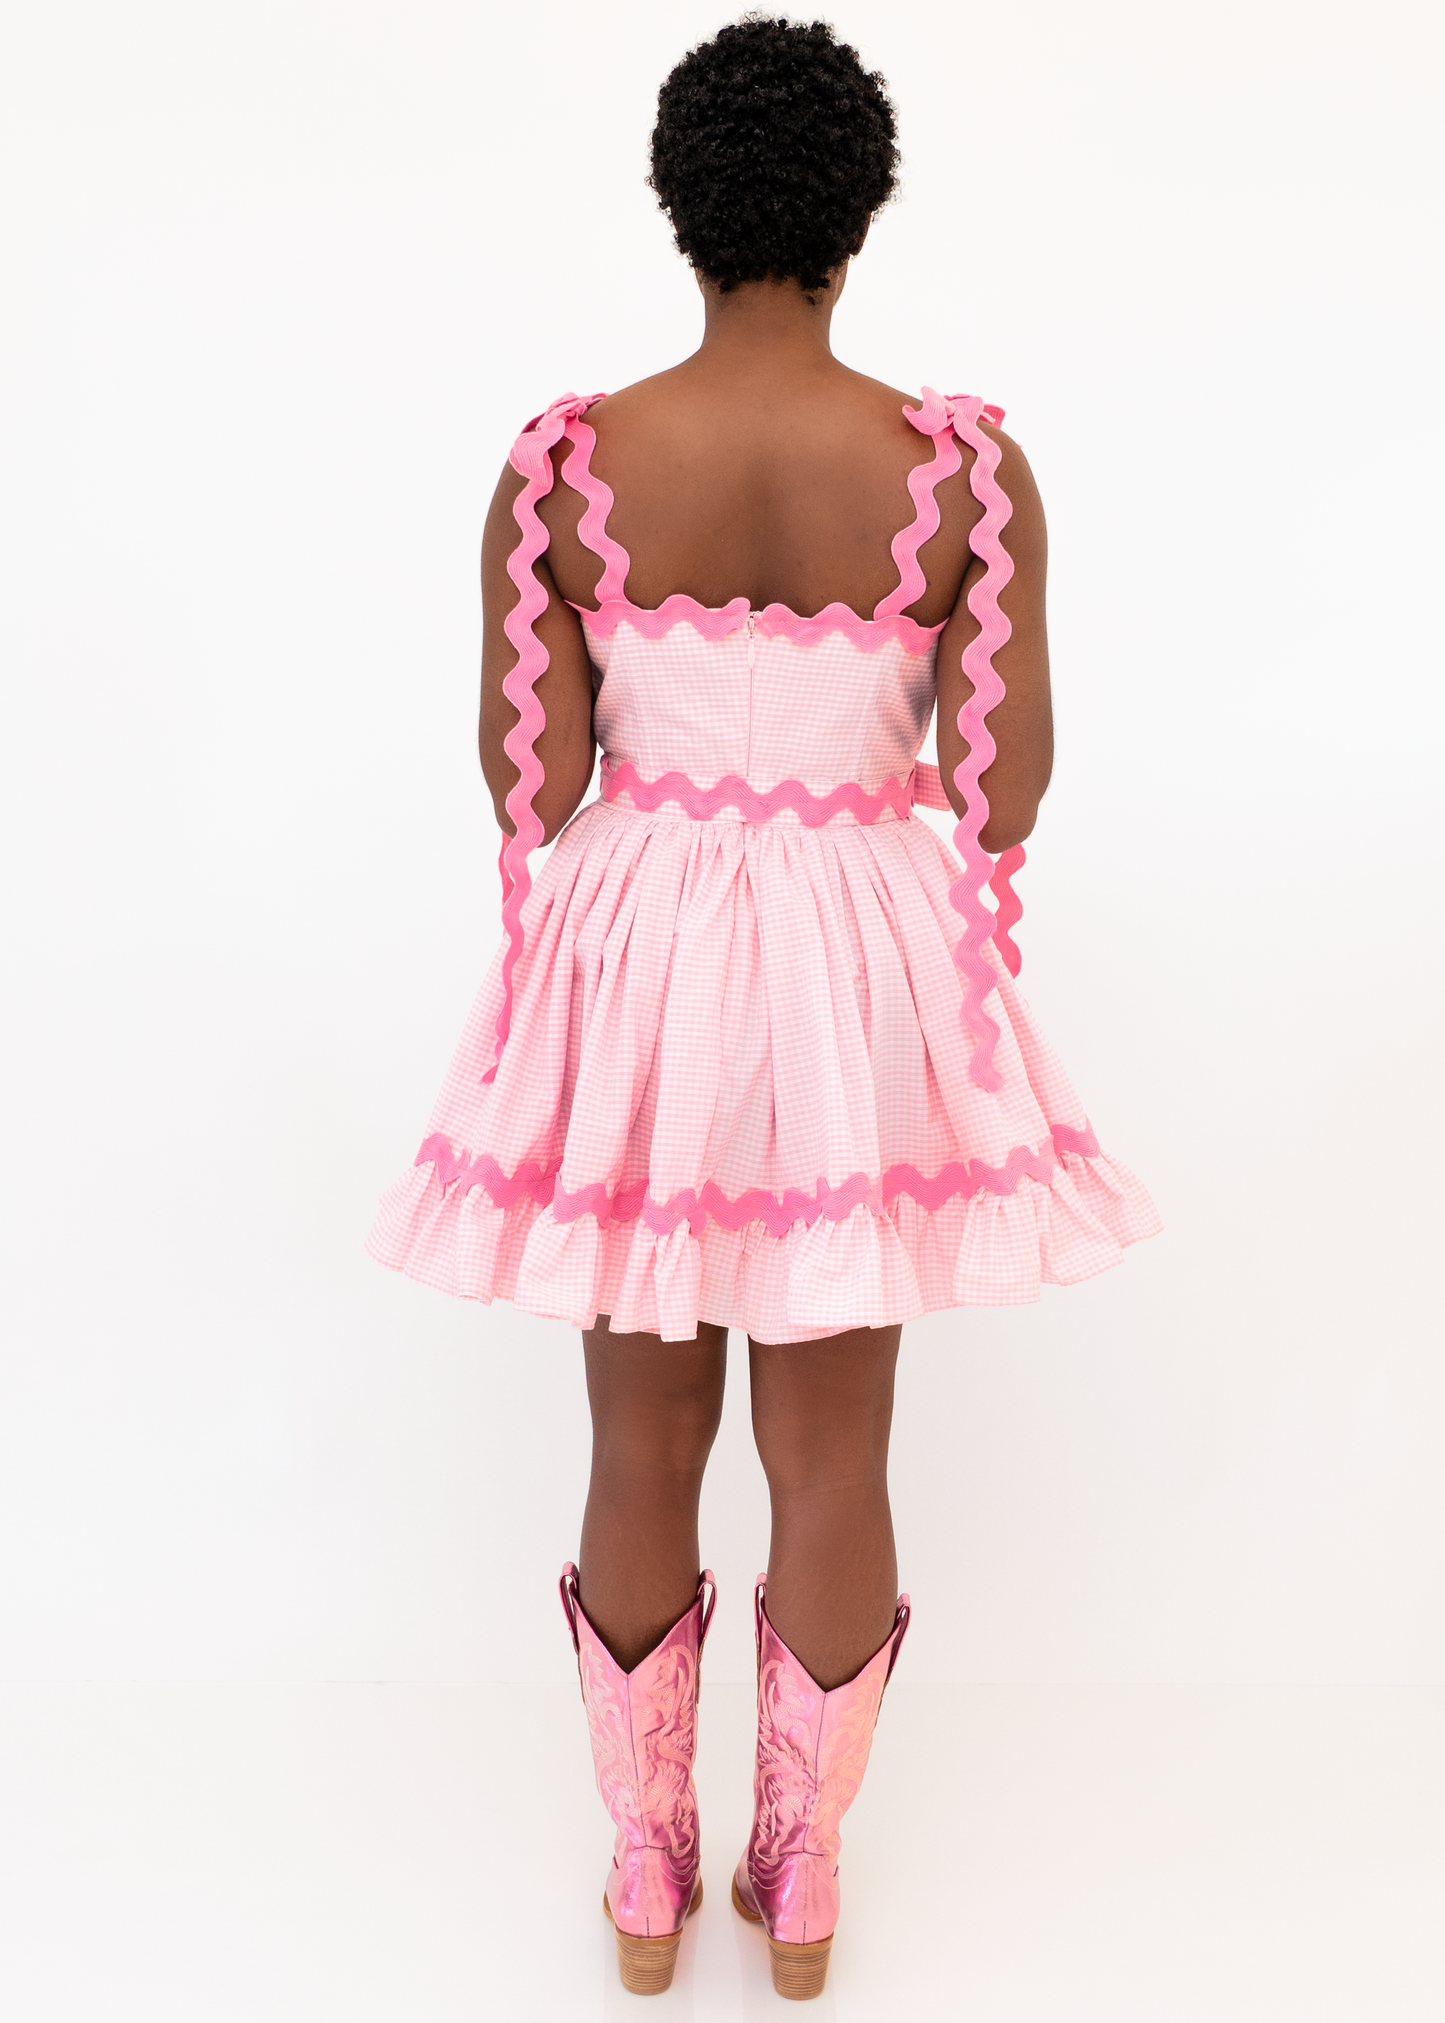 The Roz Fráoula Dress - Pink Gingham & Ric Rac